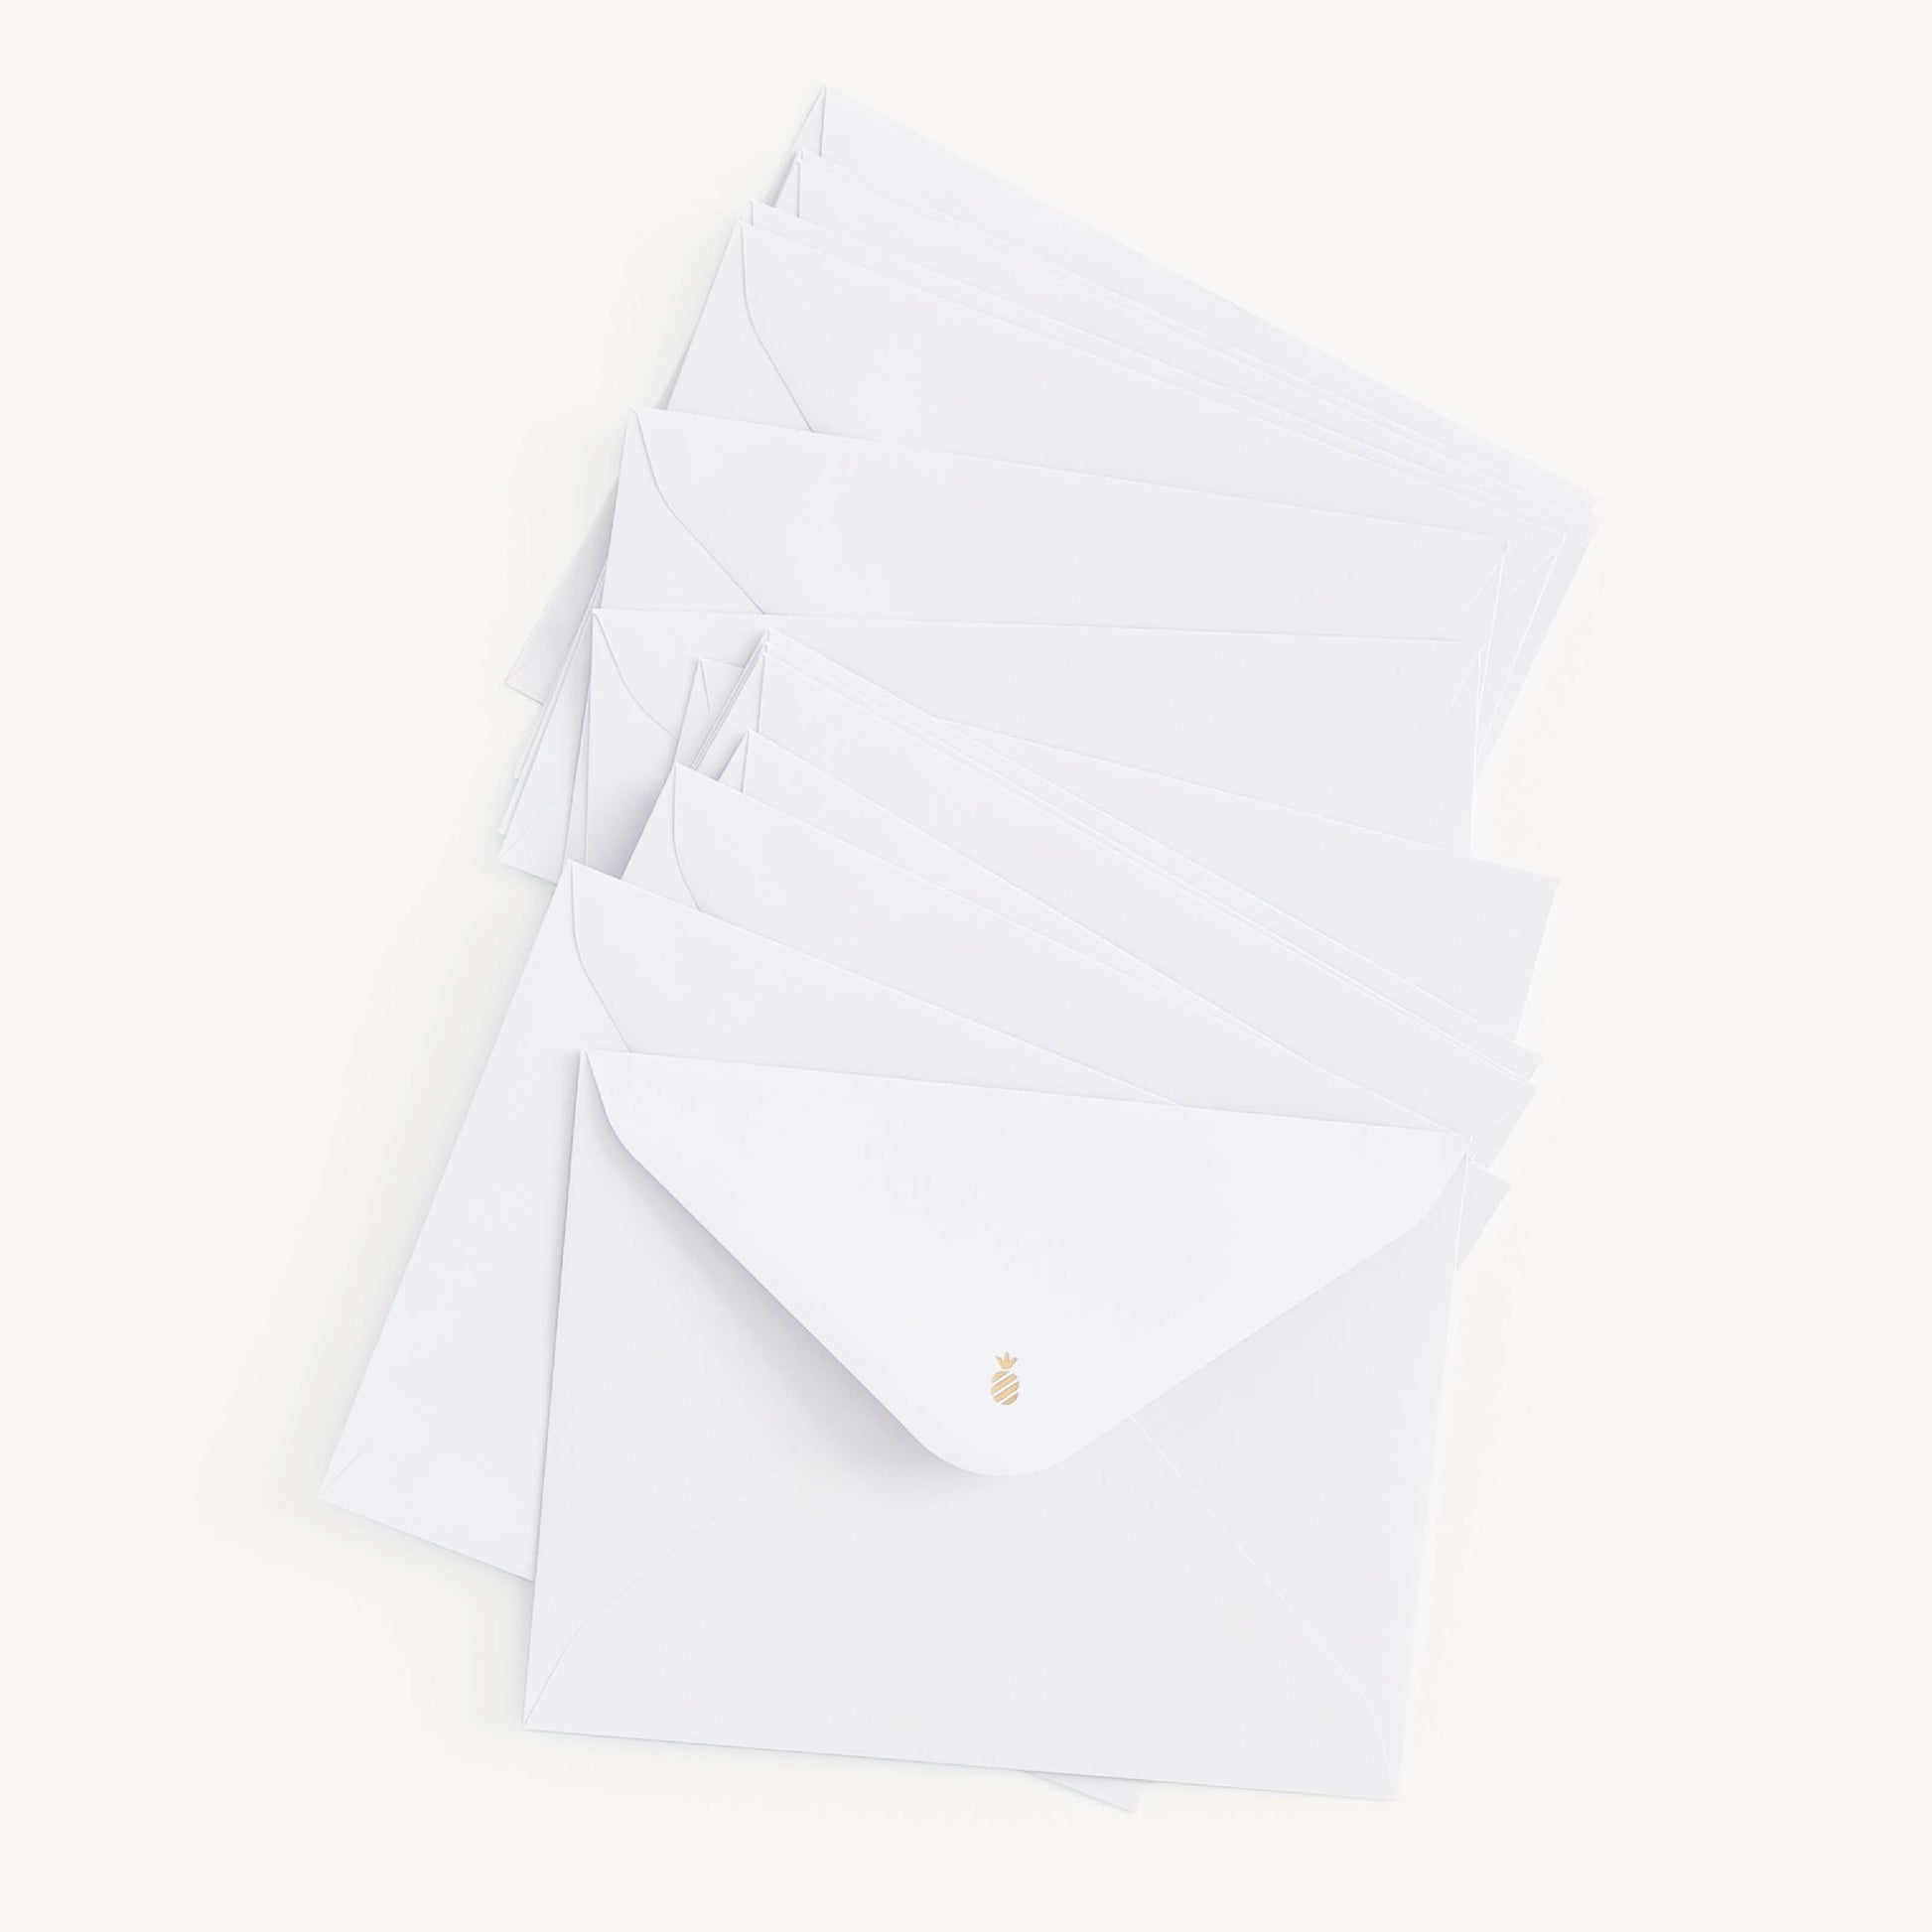 Simplified Card Envelopes